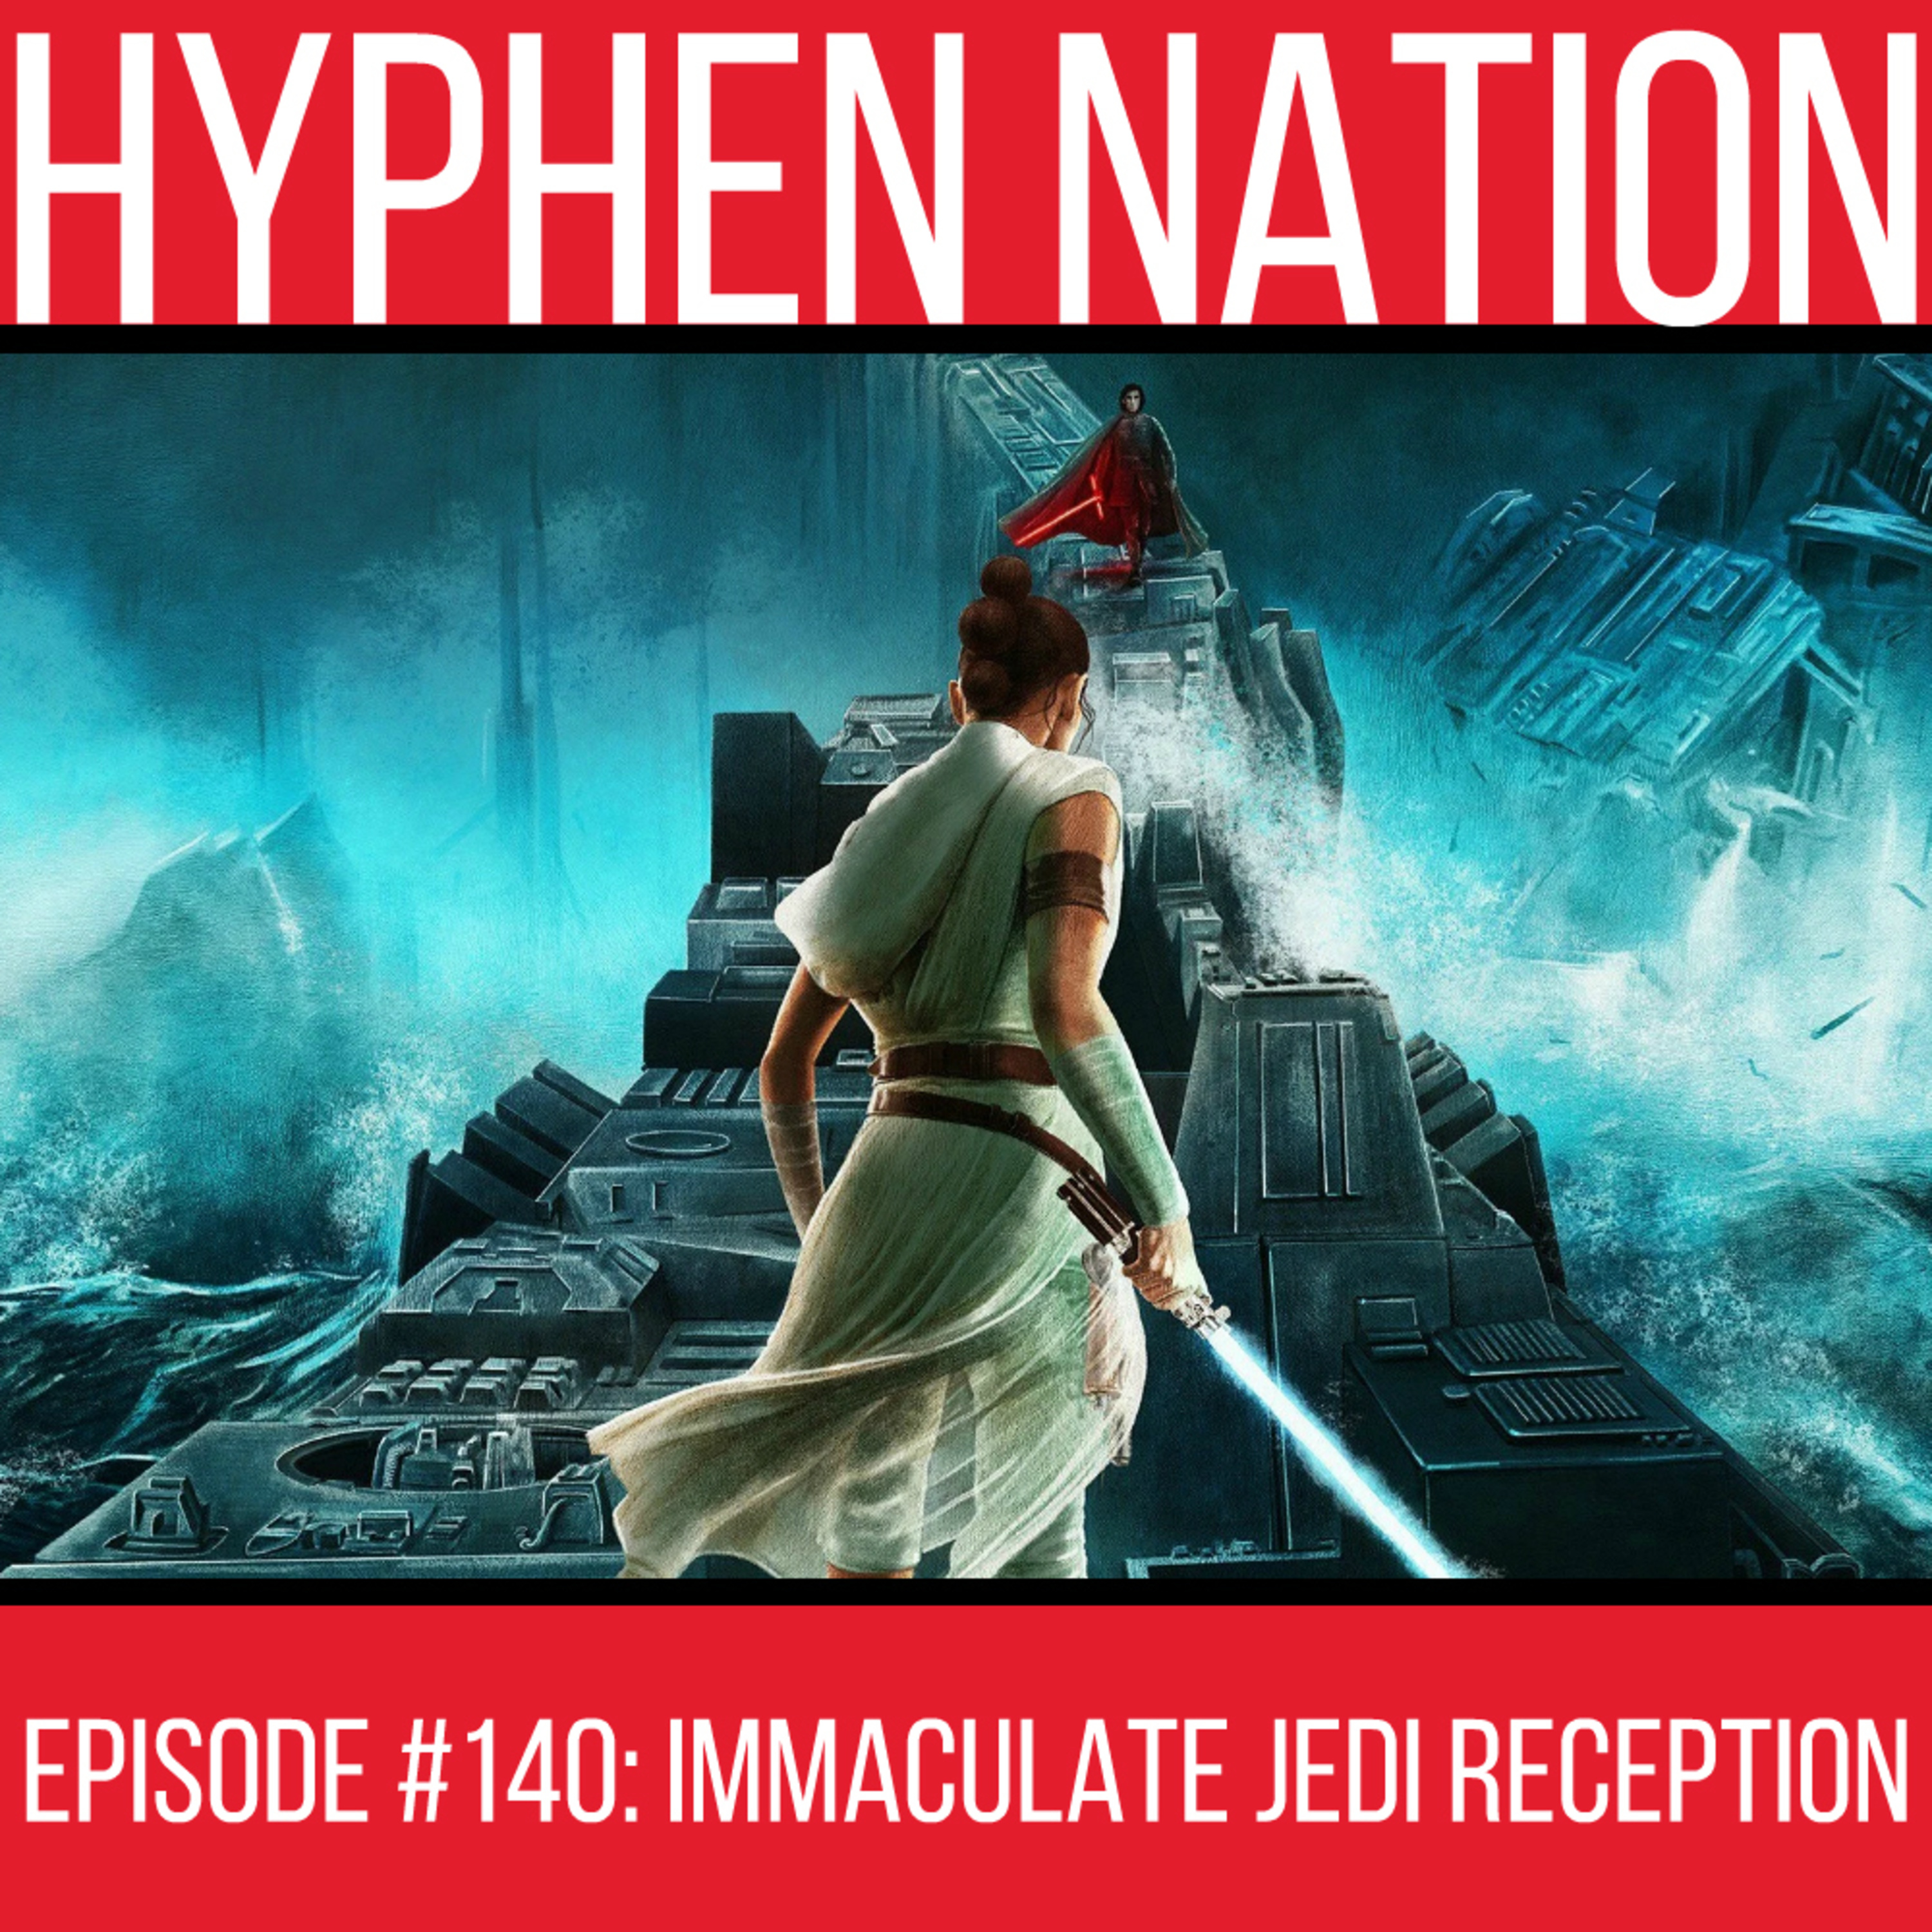 Episode #140: Immaculate Jedi Reception